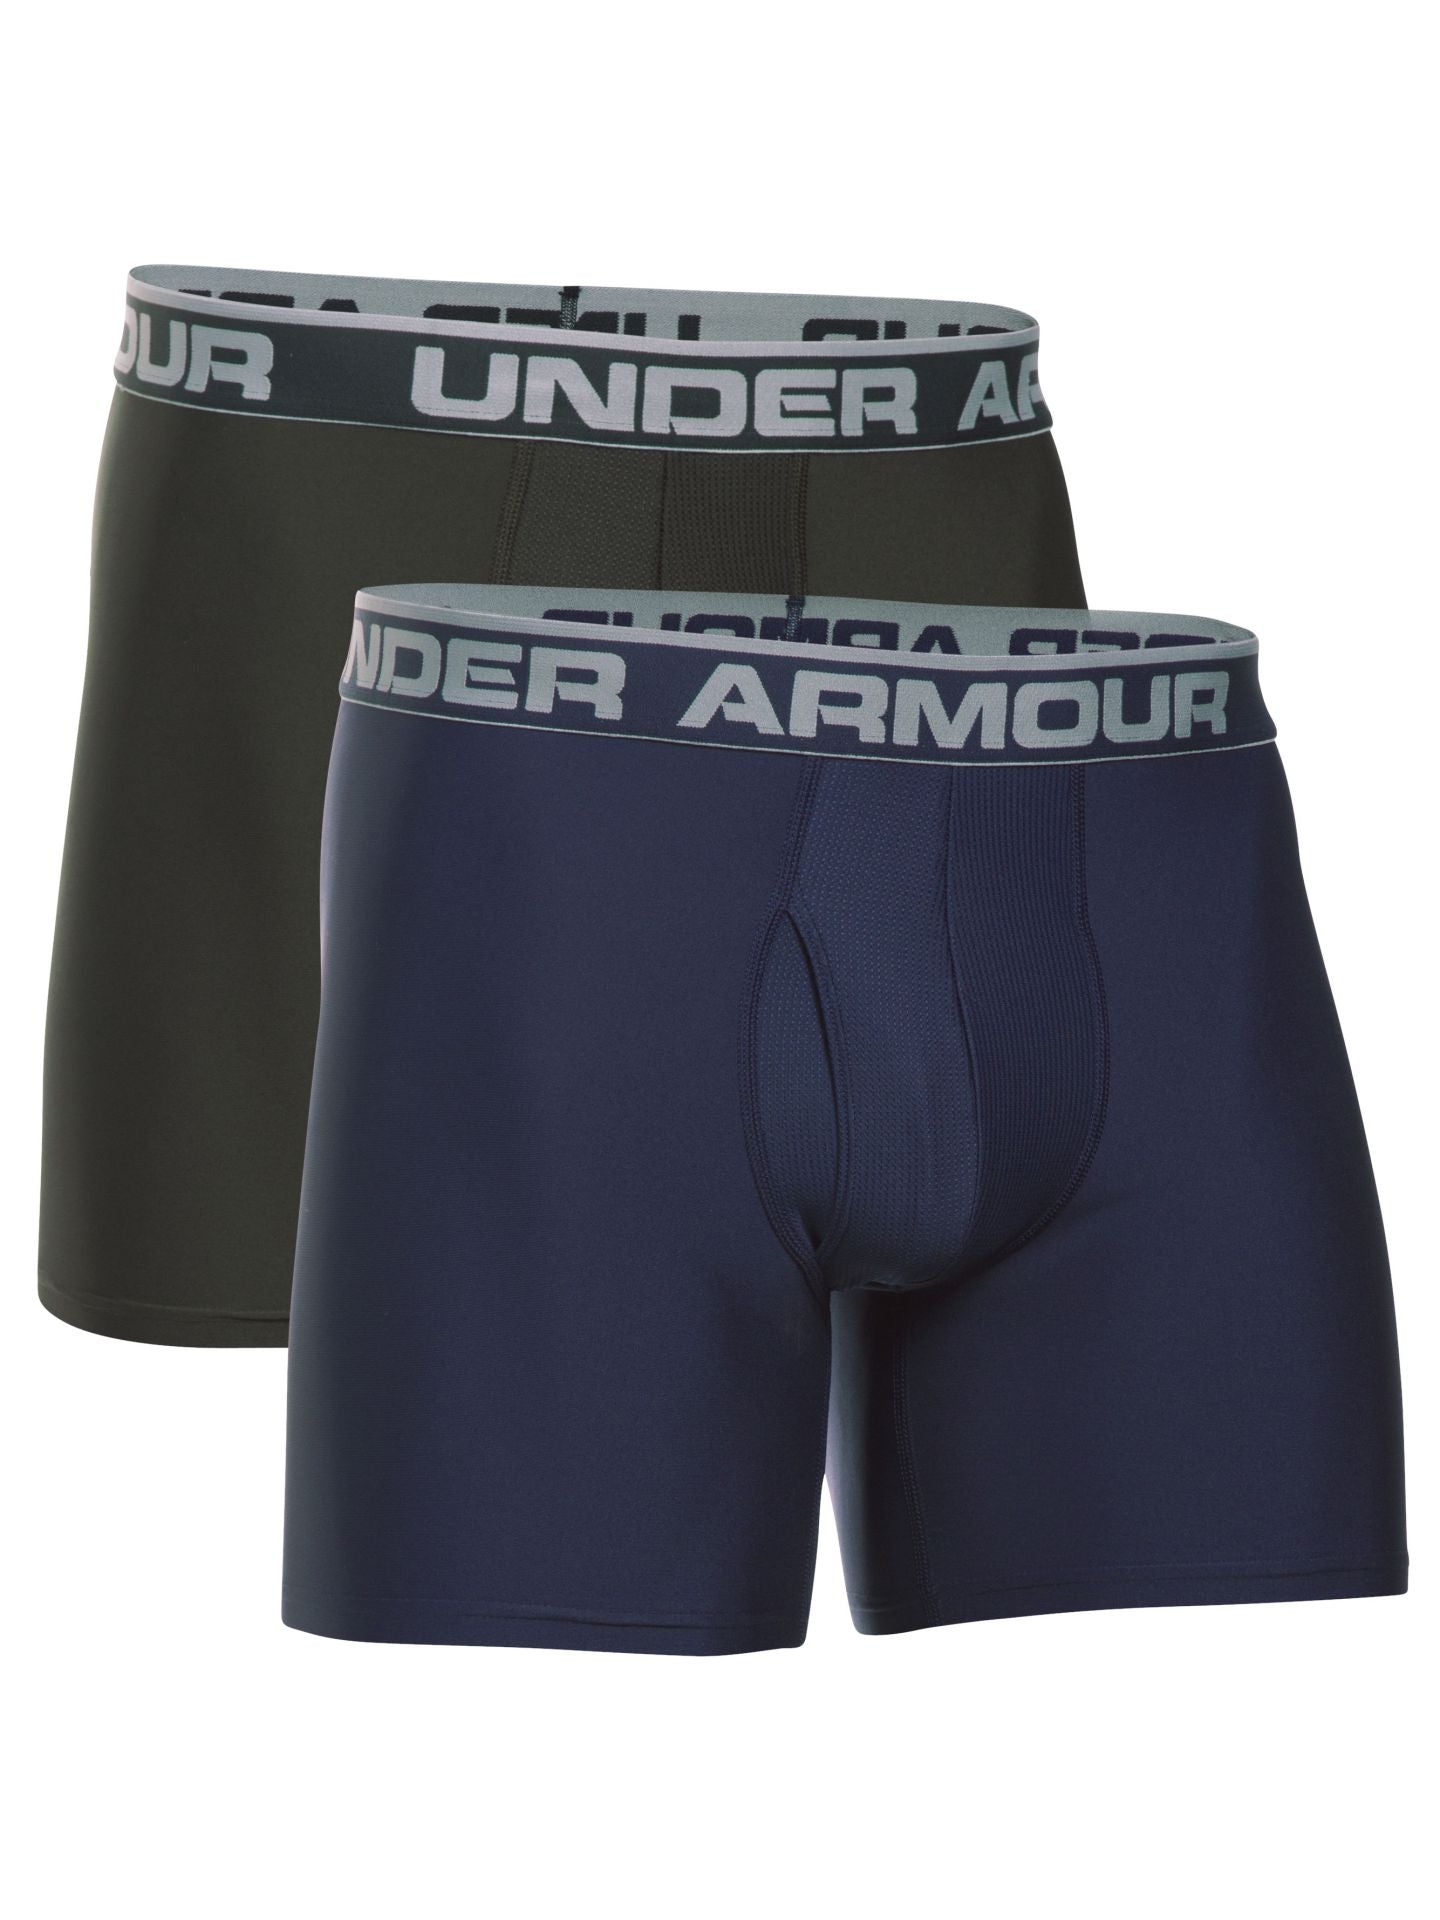 Under Armour Men's UA Original Series 6-Inch Boxerjock Boxer